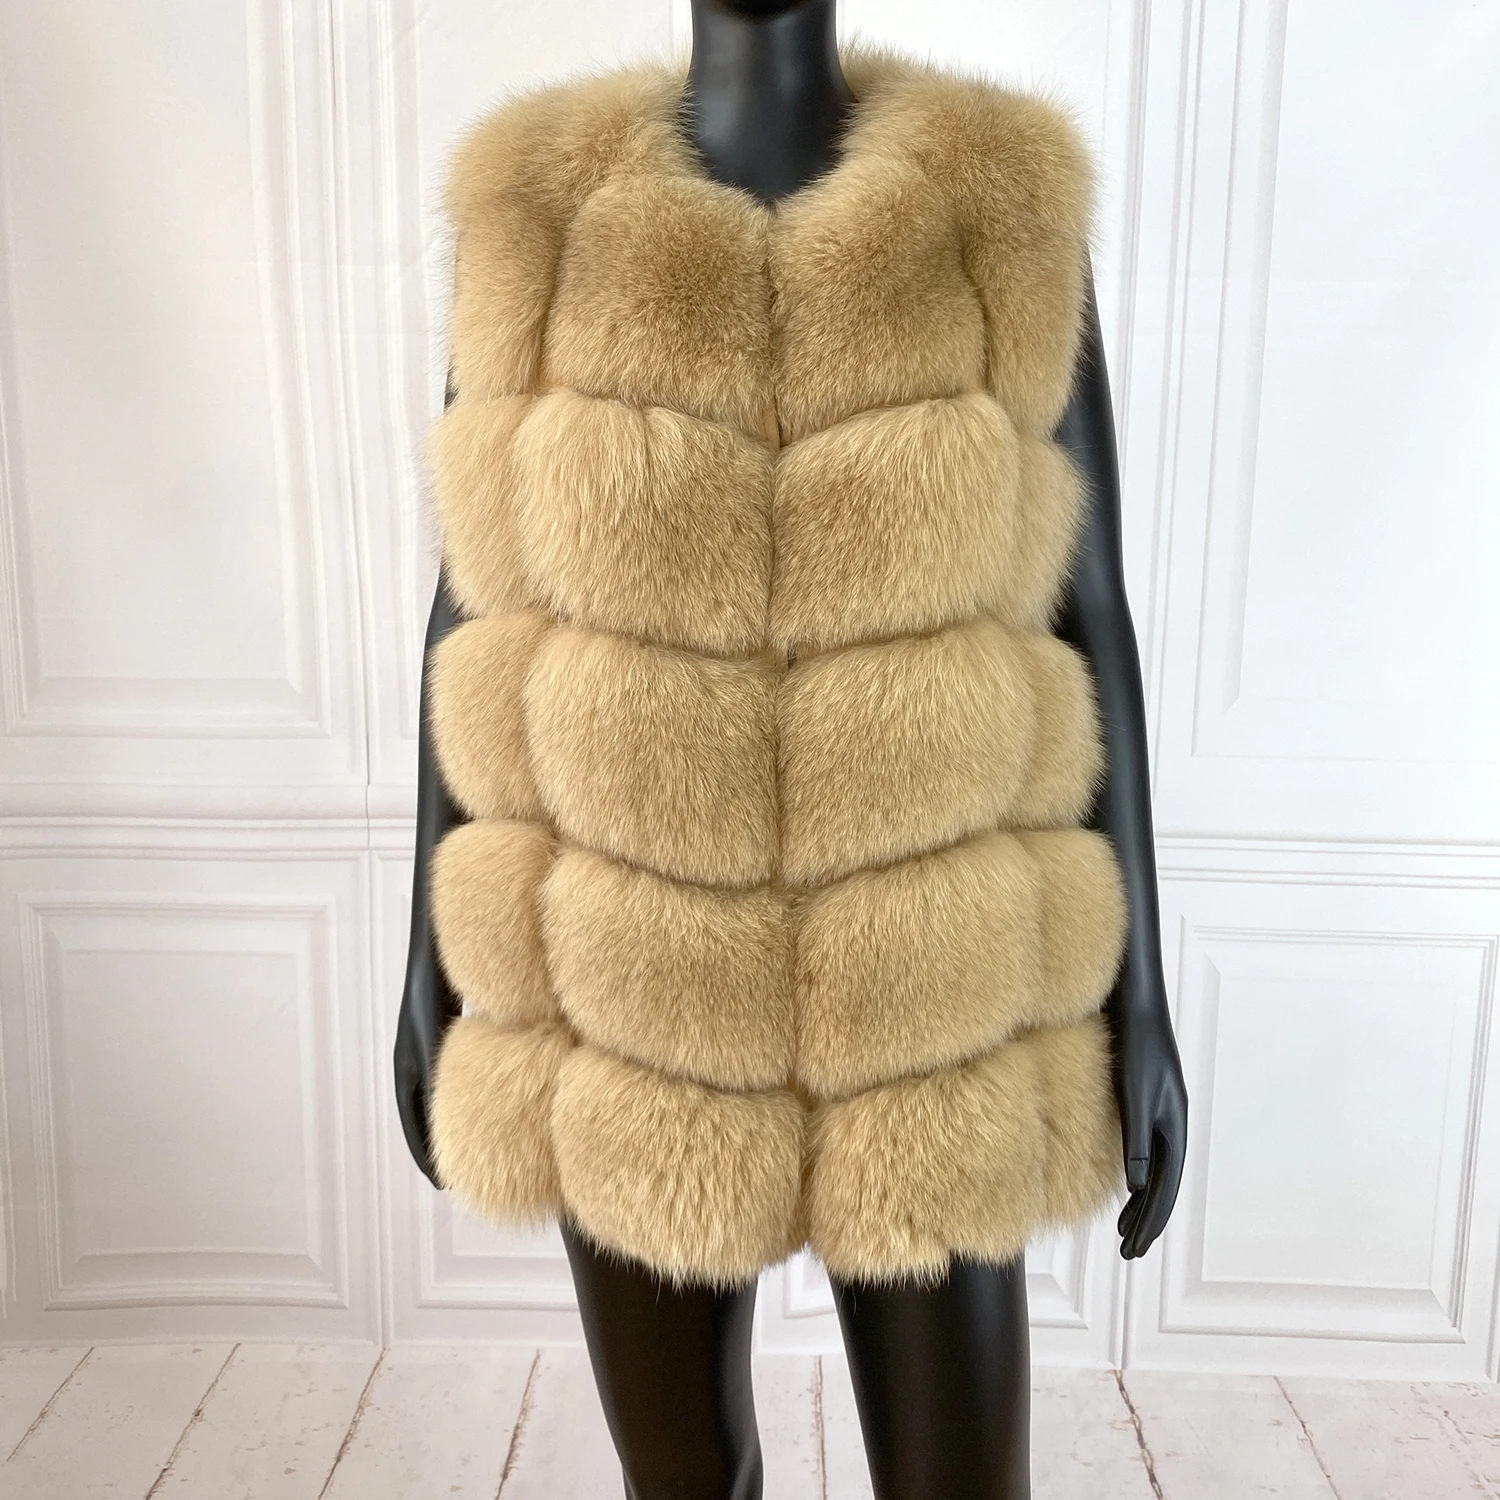 2020 New Women's Winter Real Fur Coat High Quality  Natural Fox Fur Vest Fashion Luxurious Warm Sleeveless Dark buckle jacket bubble coat women Coats & Jackets